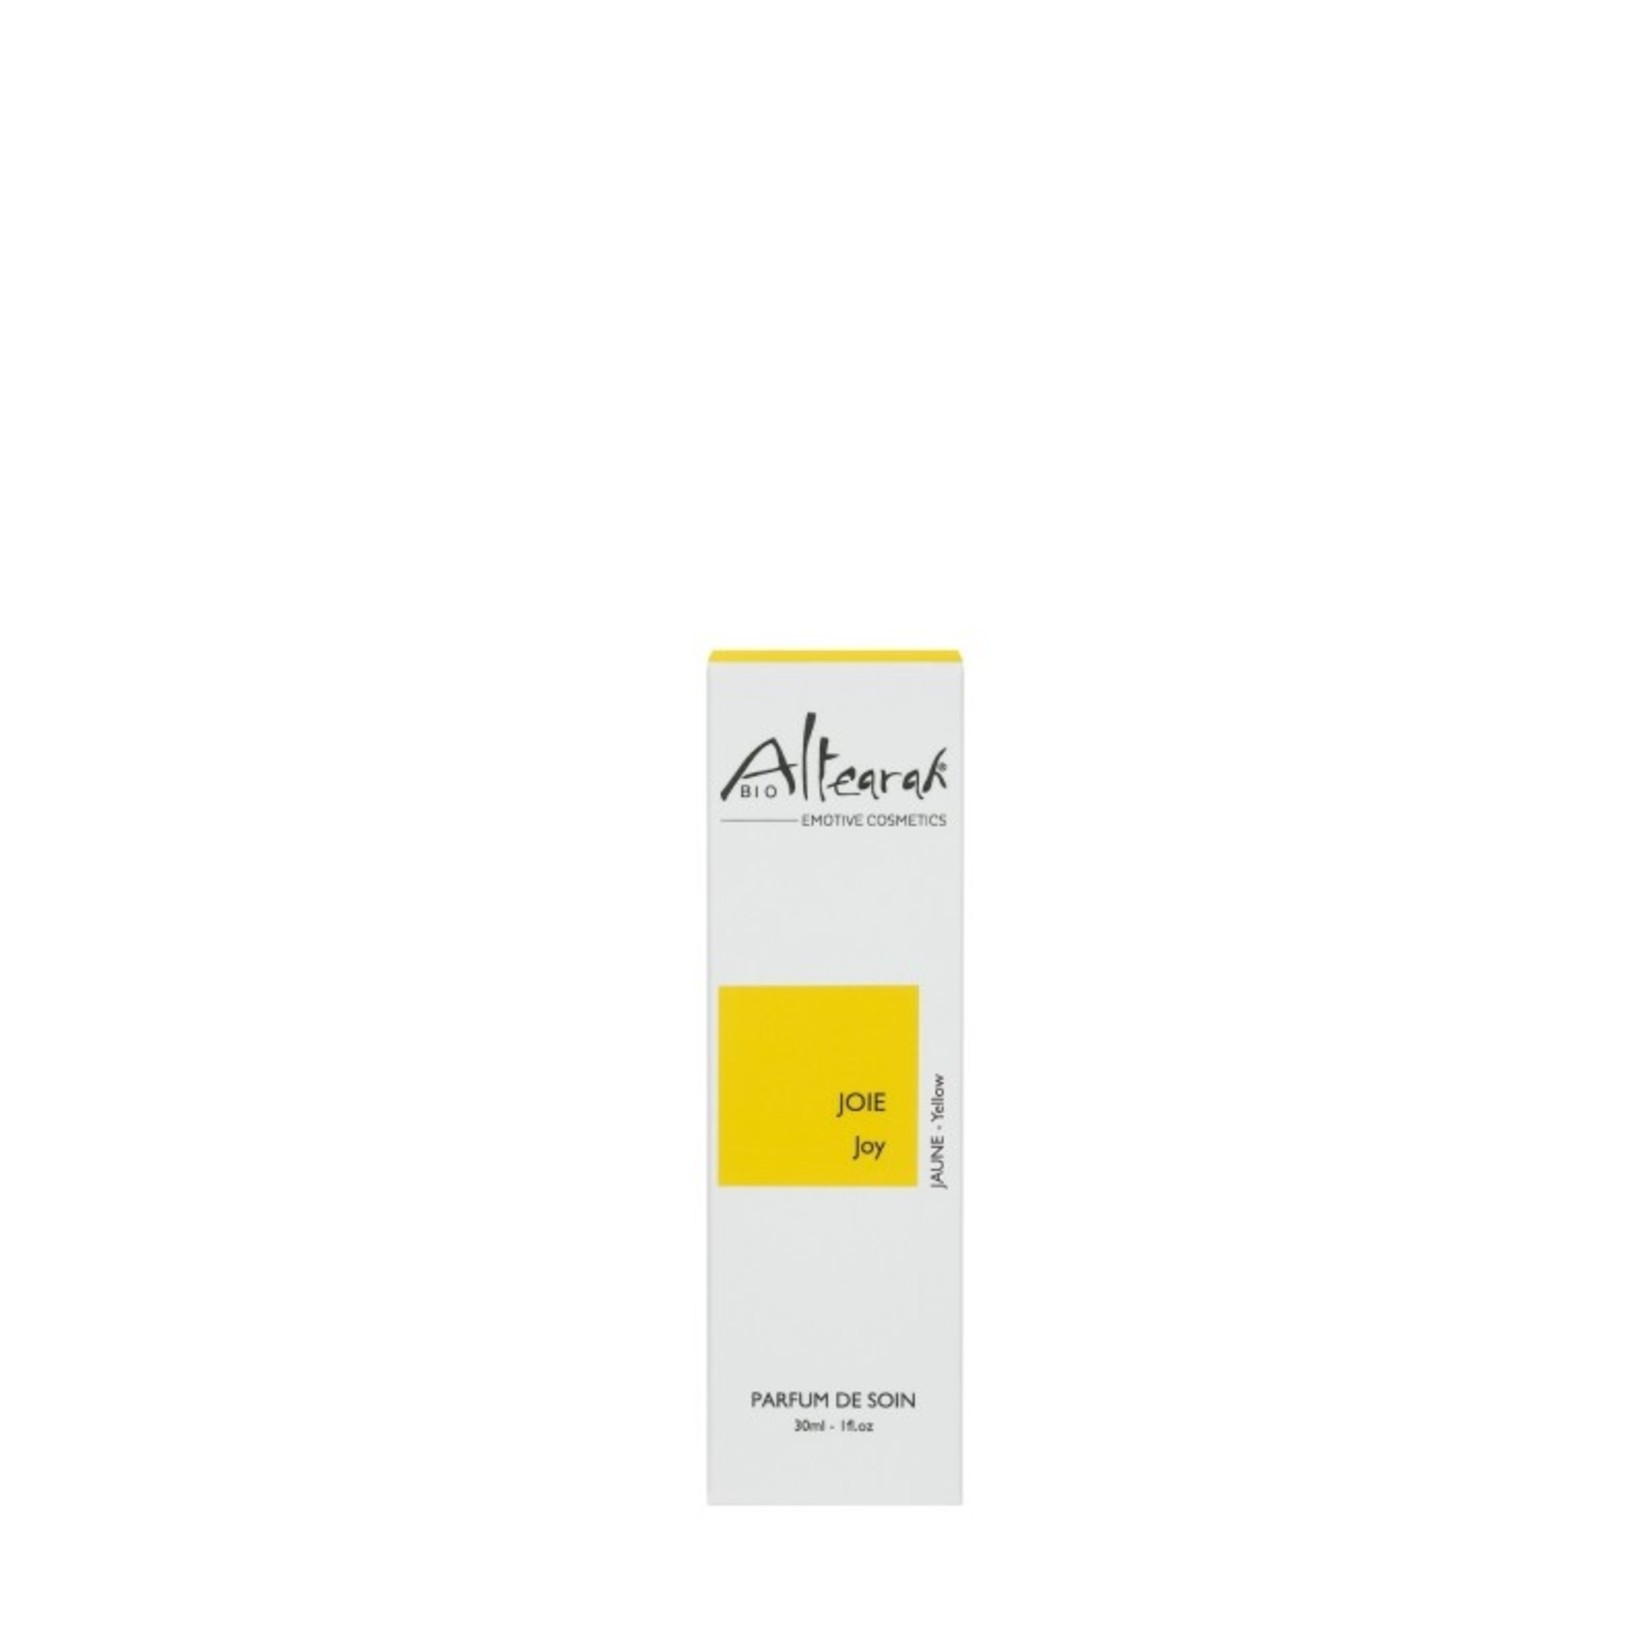 Altearah Care parfume - (Yellow) Joy